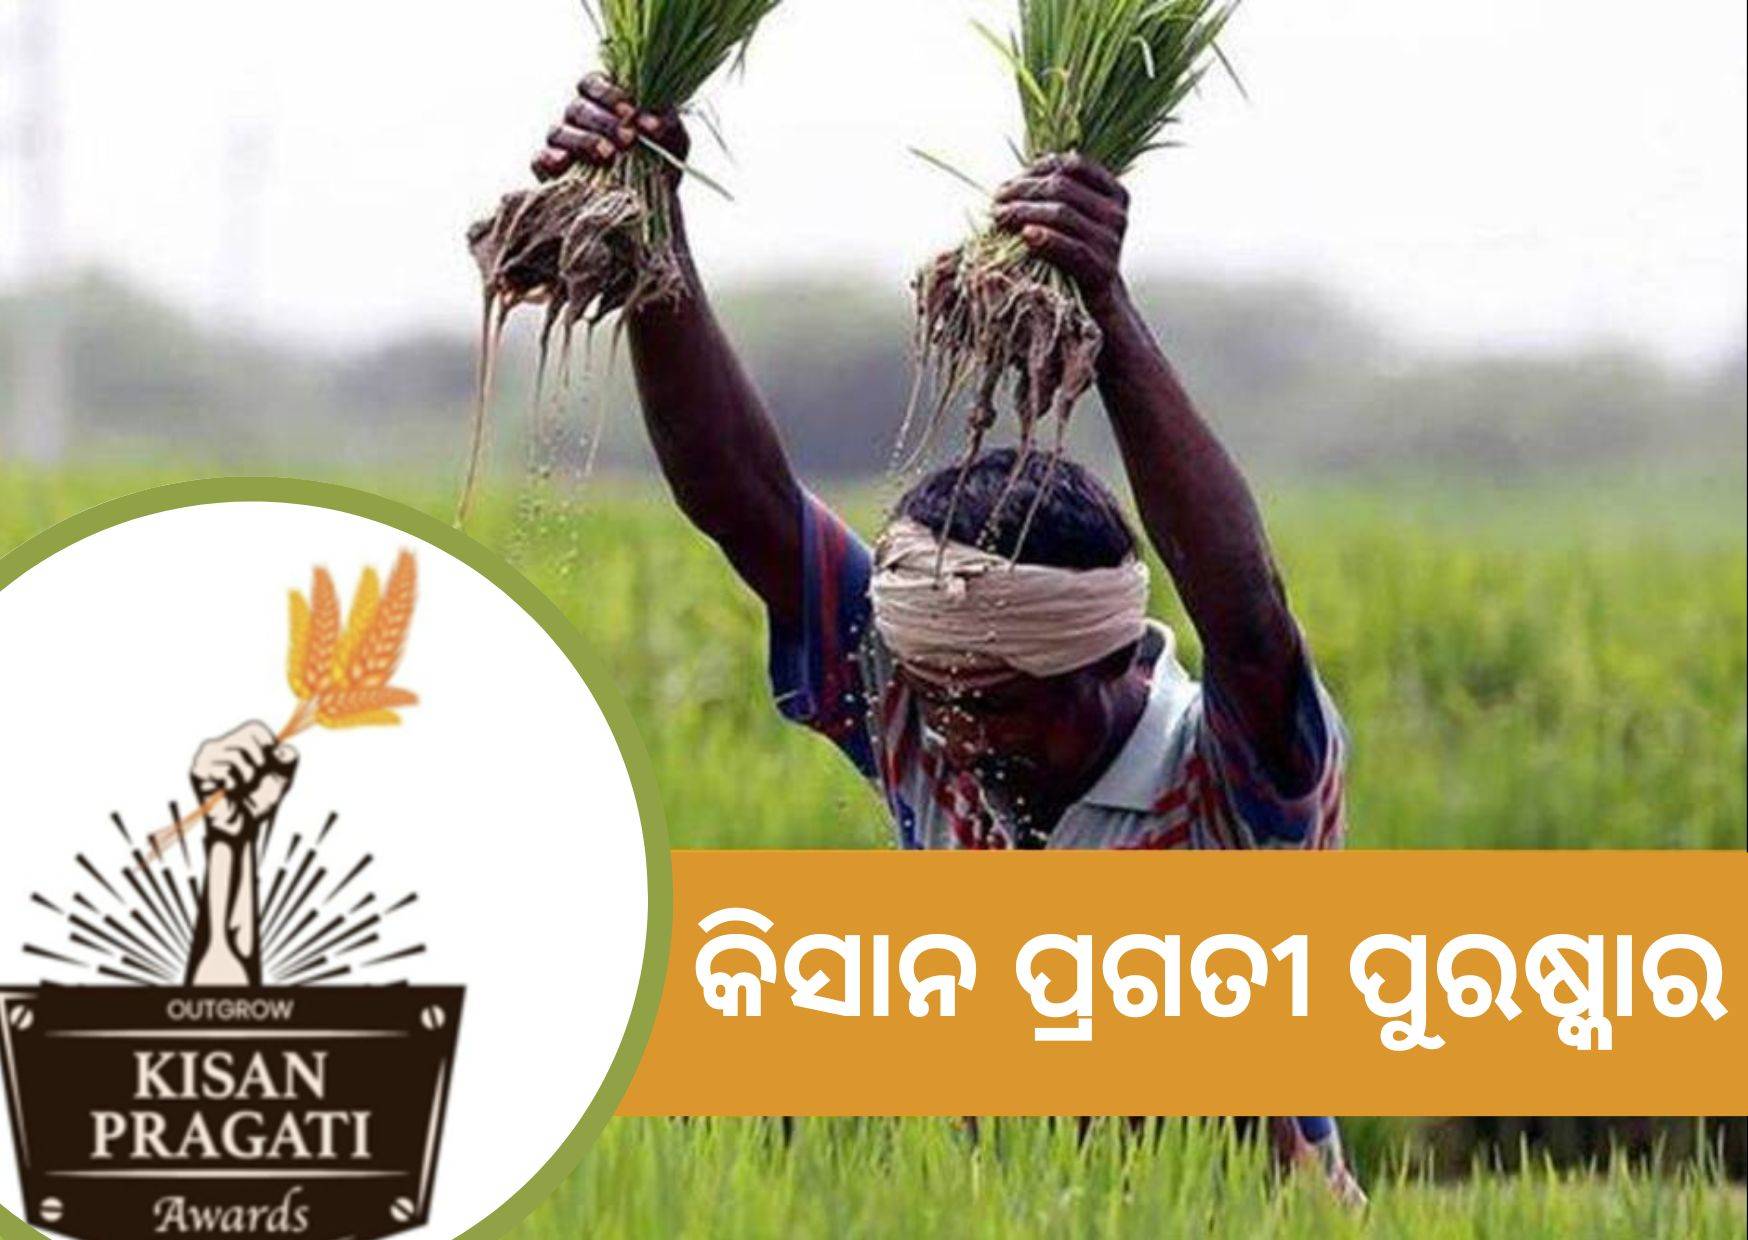 9 farmers bag Kisan Pragati awards for innovative farm practices